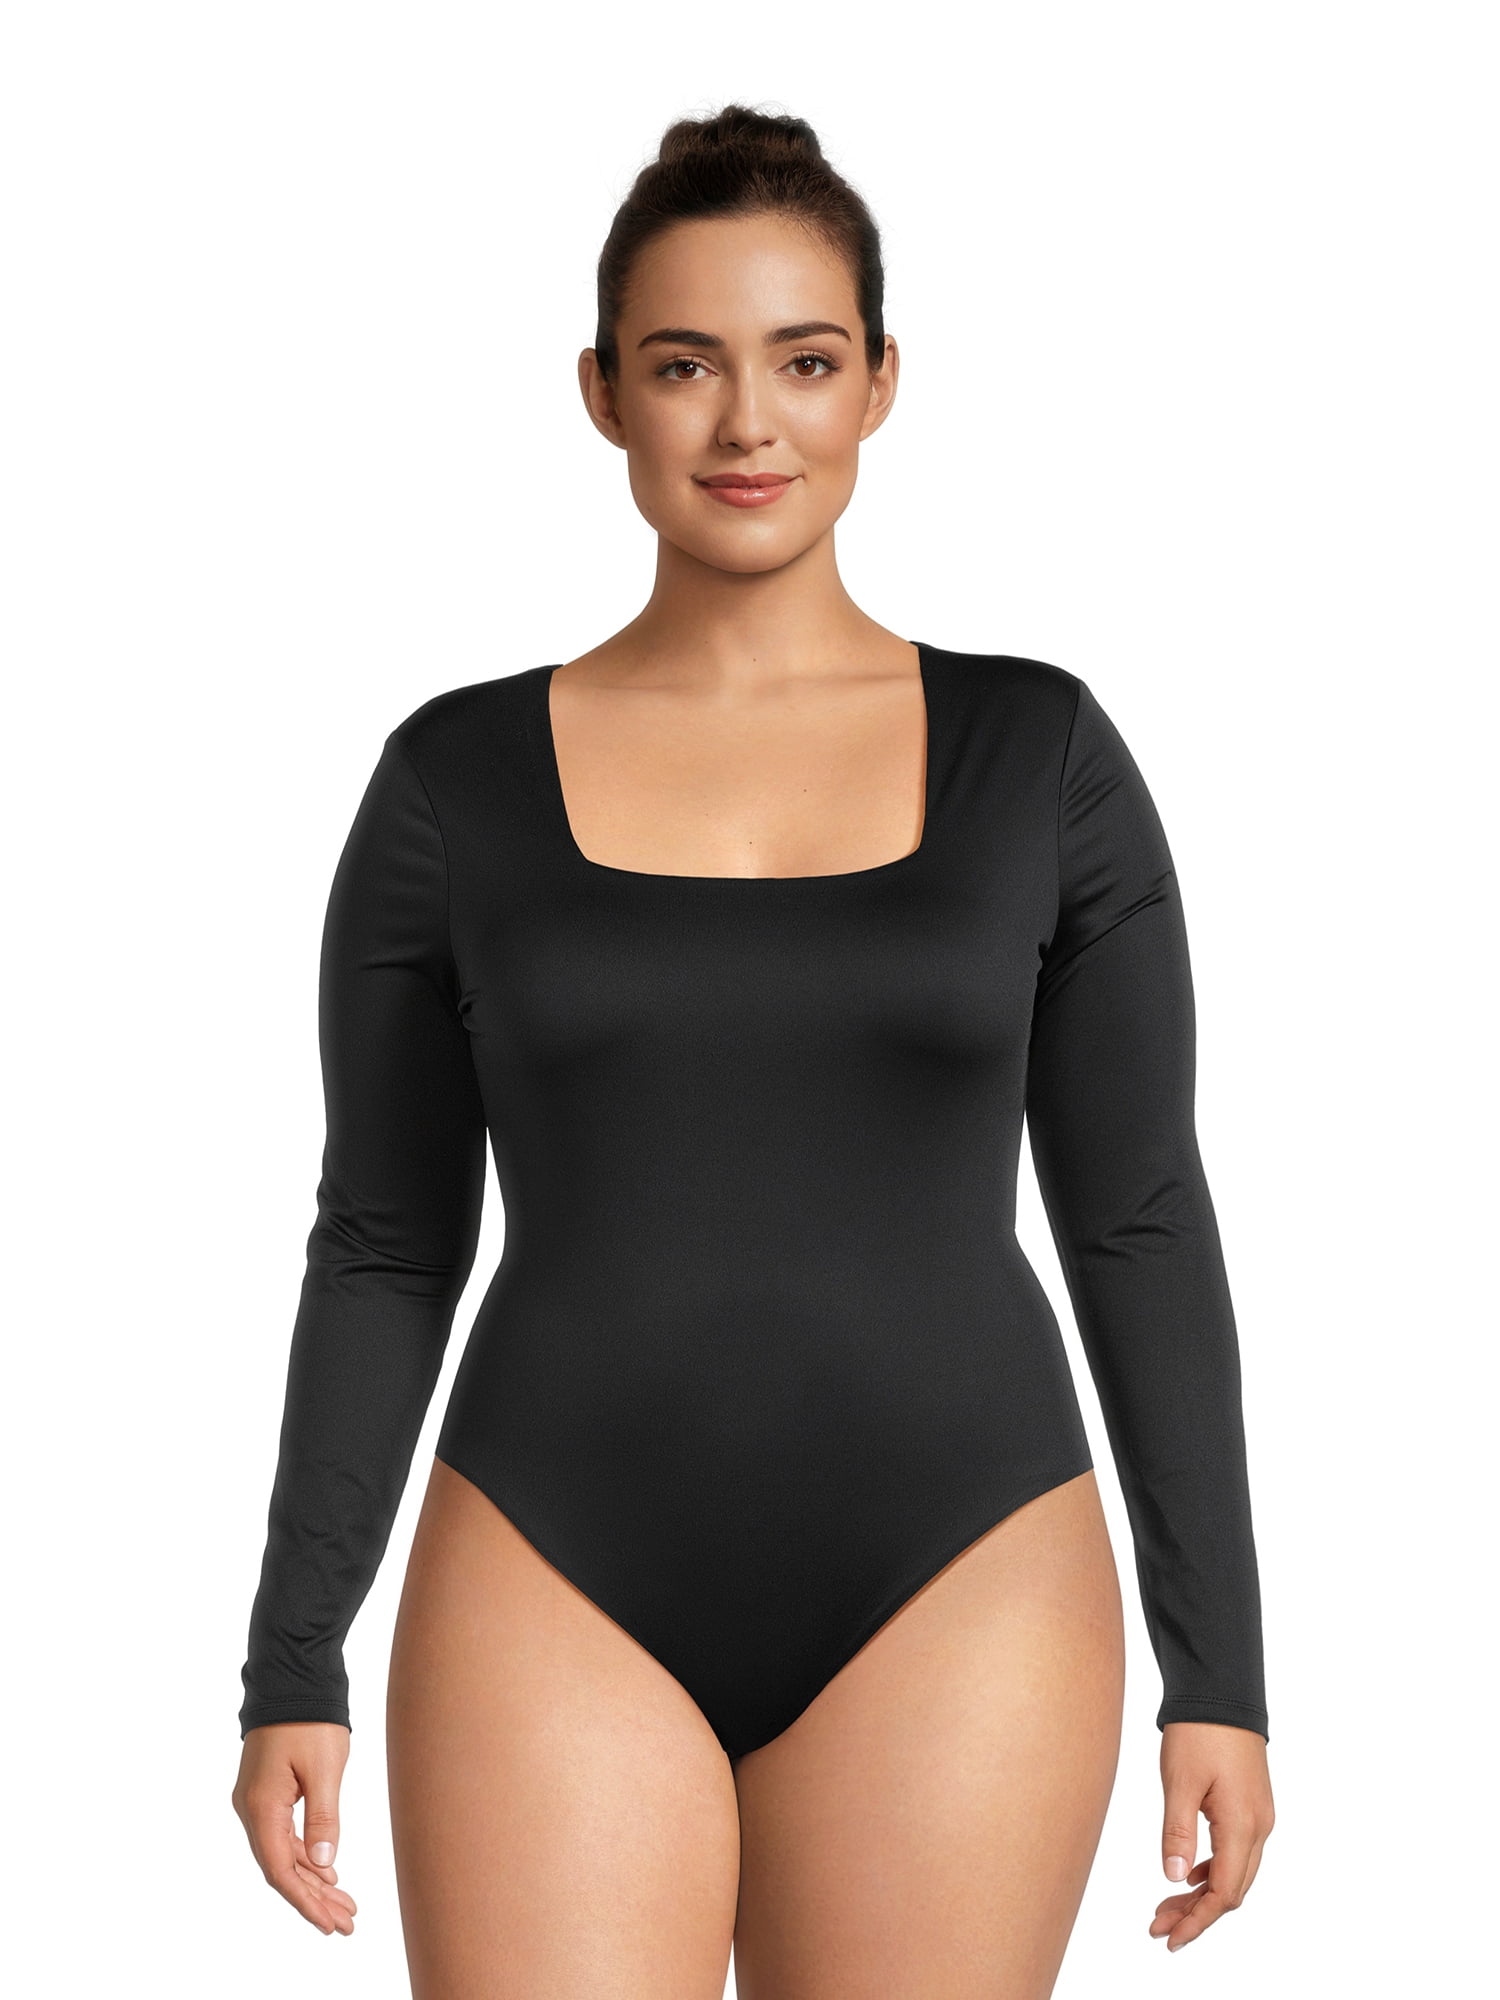 POSESHE Women's Plus Size Square Tank Bodysuit in Black, M-5X